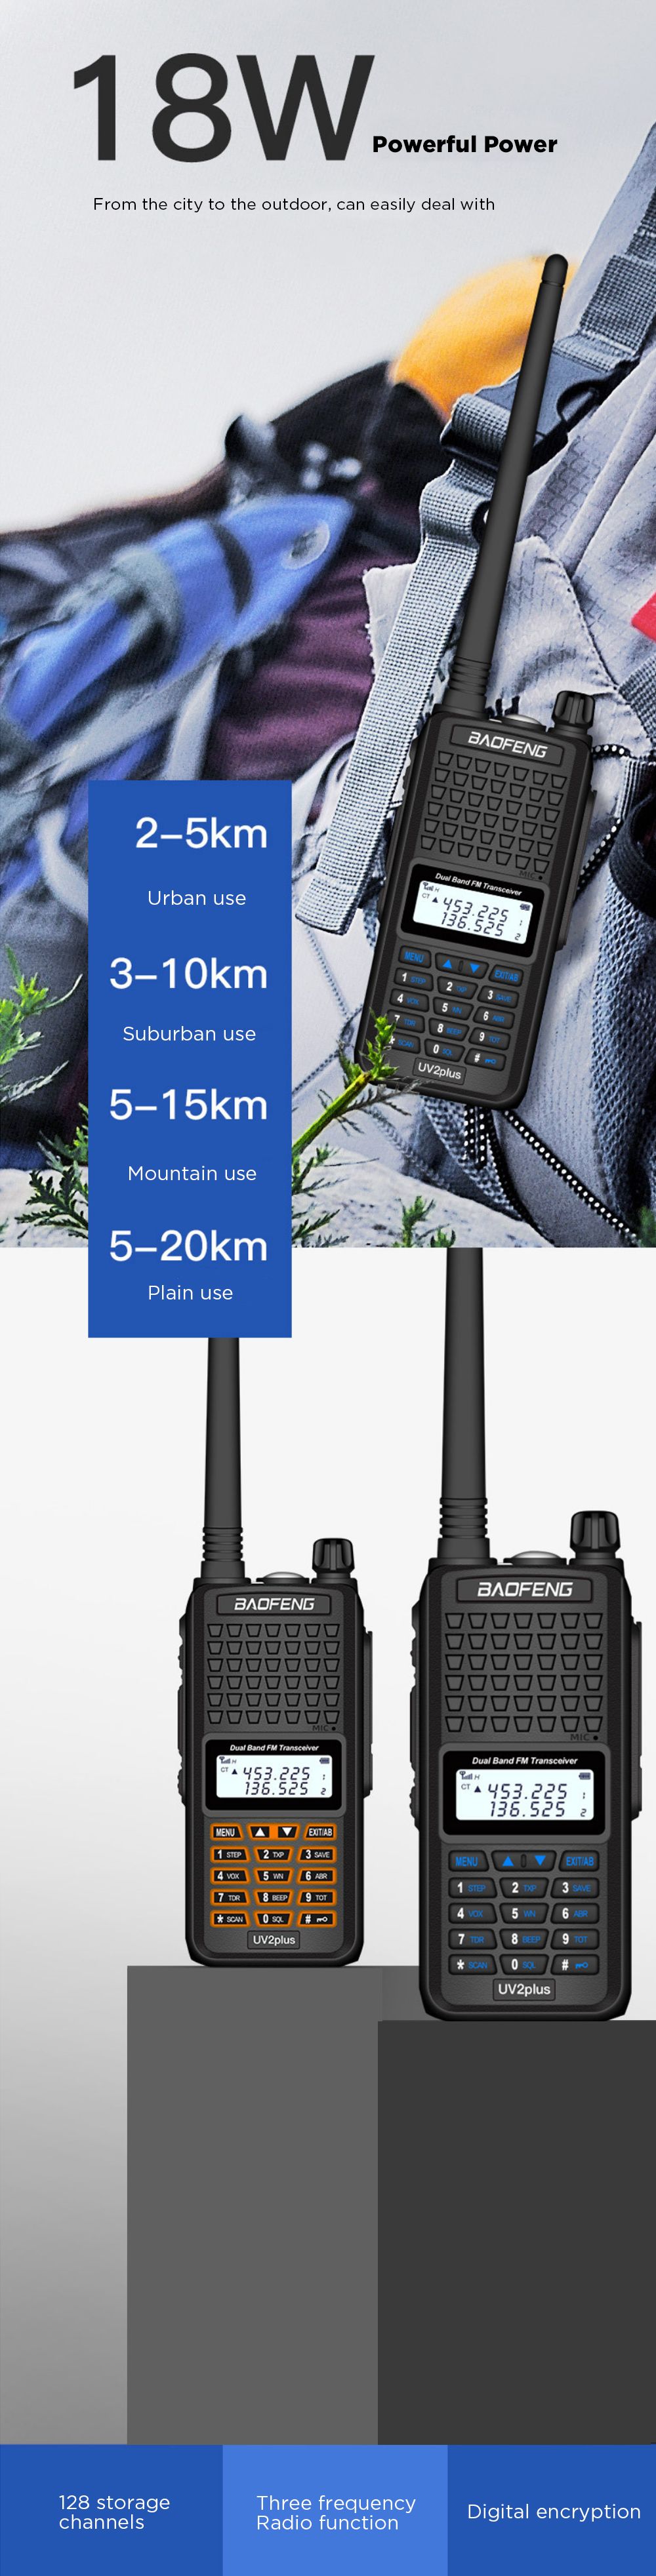 BAOFENG-BF-UV2plus-9500mAh-5-20km-IP68-Waterproof-UV-Dual-Band-Two-way-Radio-Walkie-Talkie-Outdoor-H-1682451